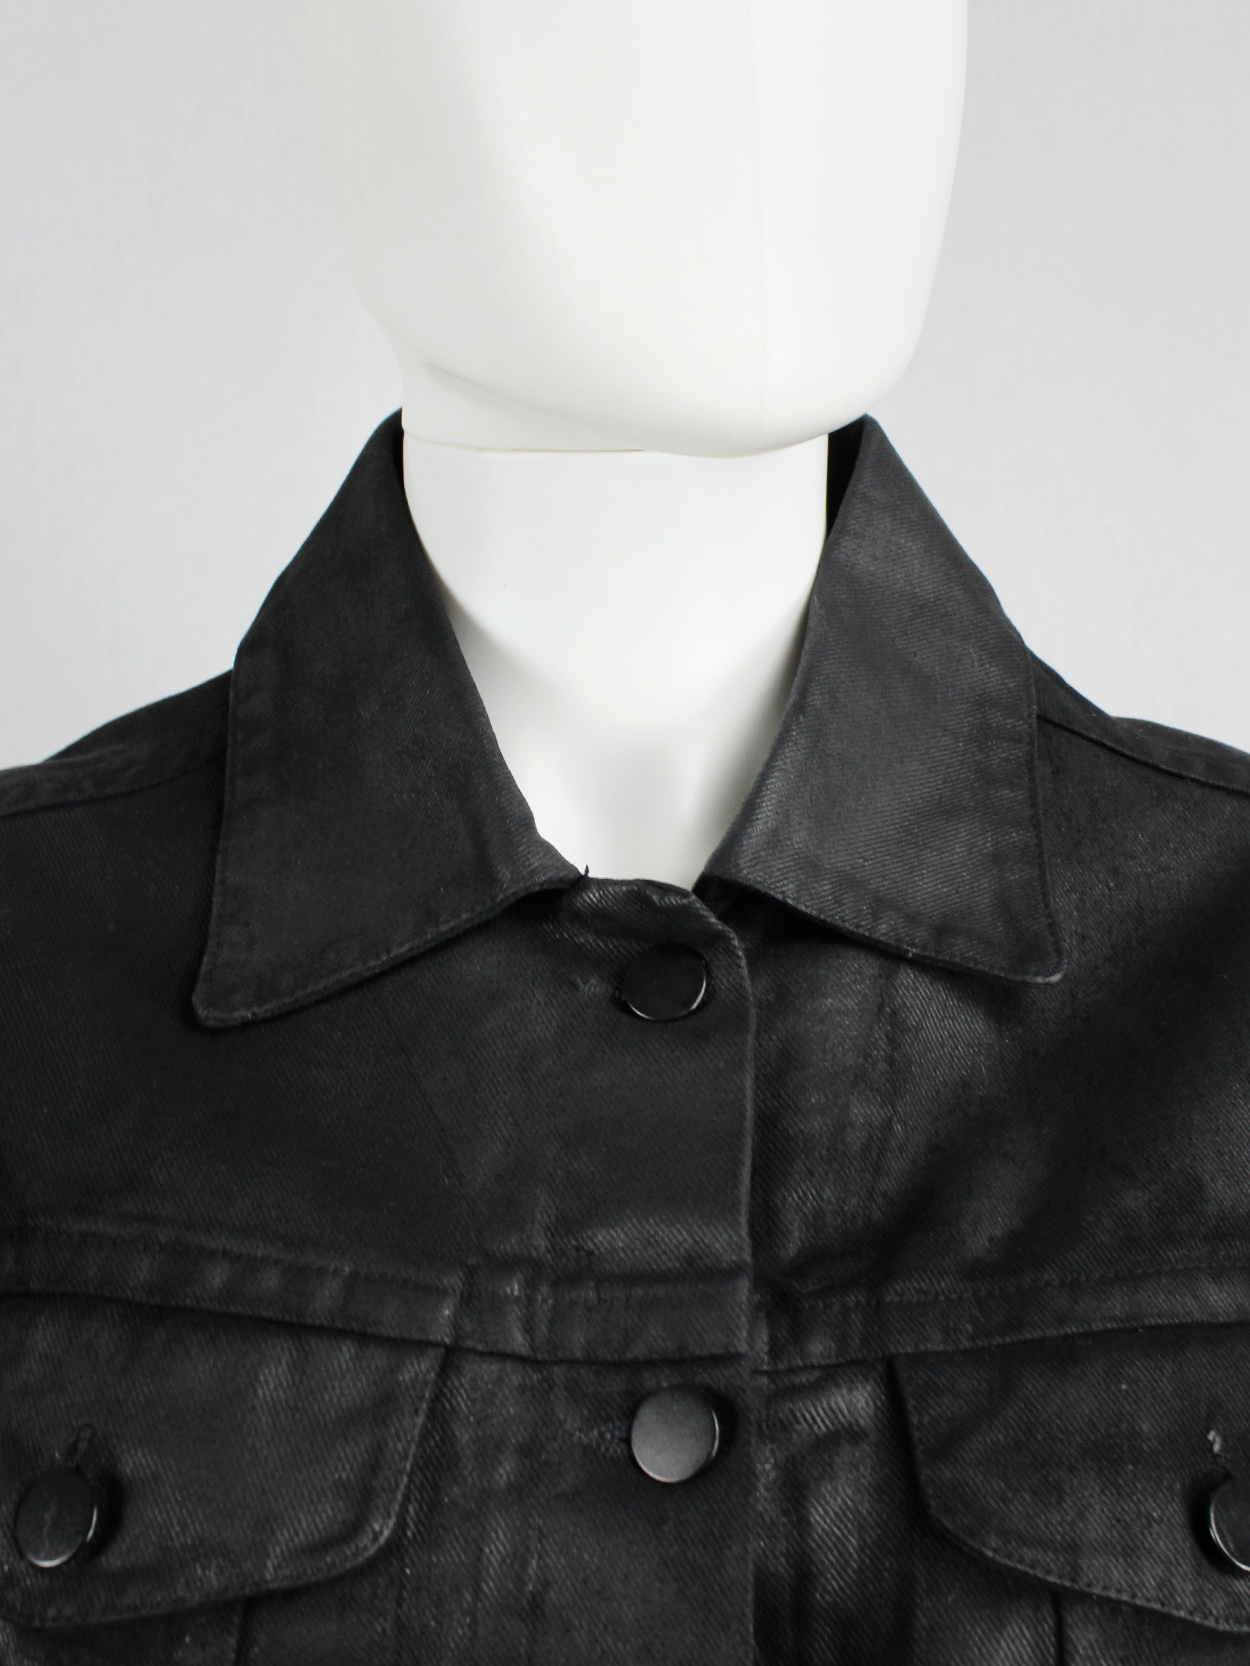 vaniitas archive Maison Martin Margiela 6 black coated denim jacket 1997 (7)